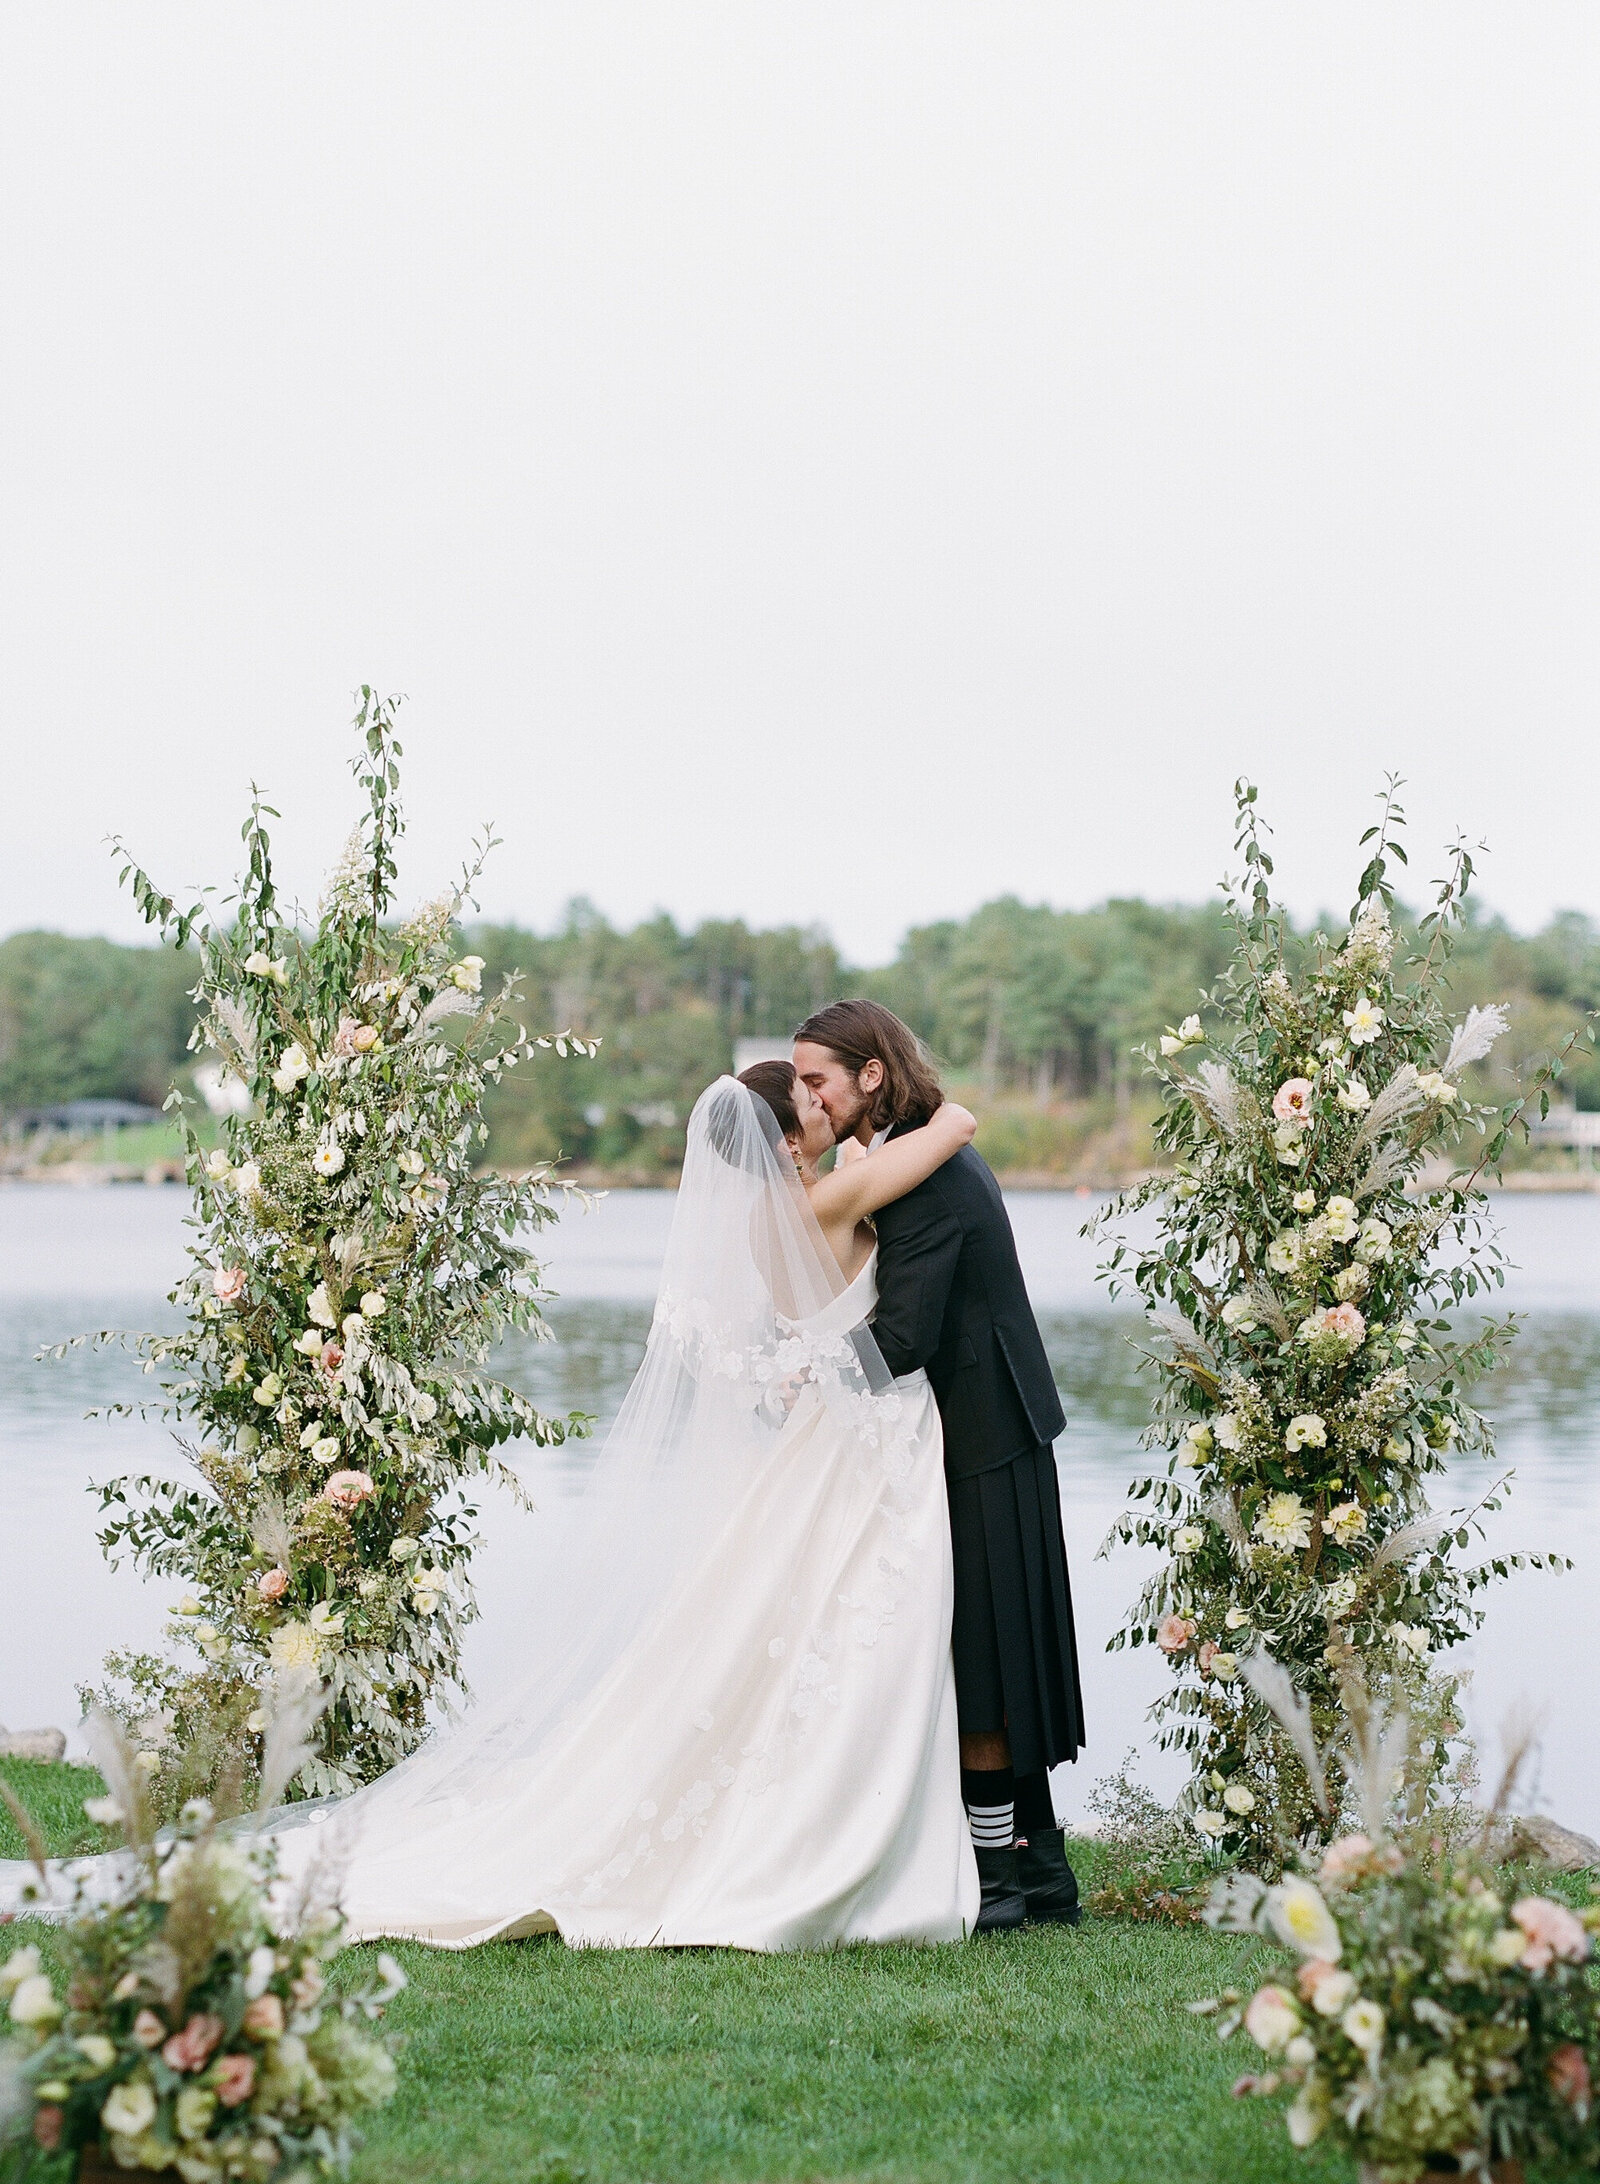 Jacqueline Anne Photography - Halifax Wedding Photographer - Lizzie and Miles wedding-73